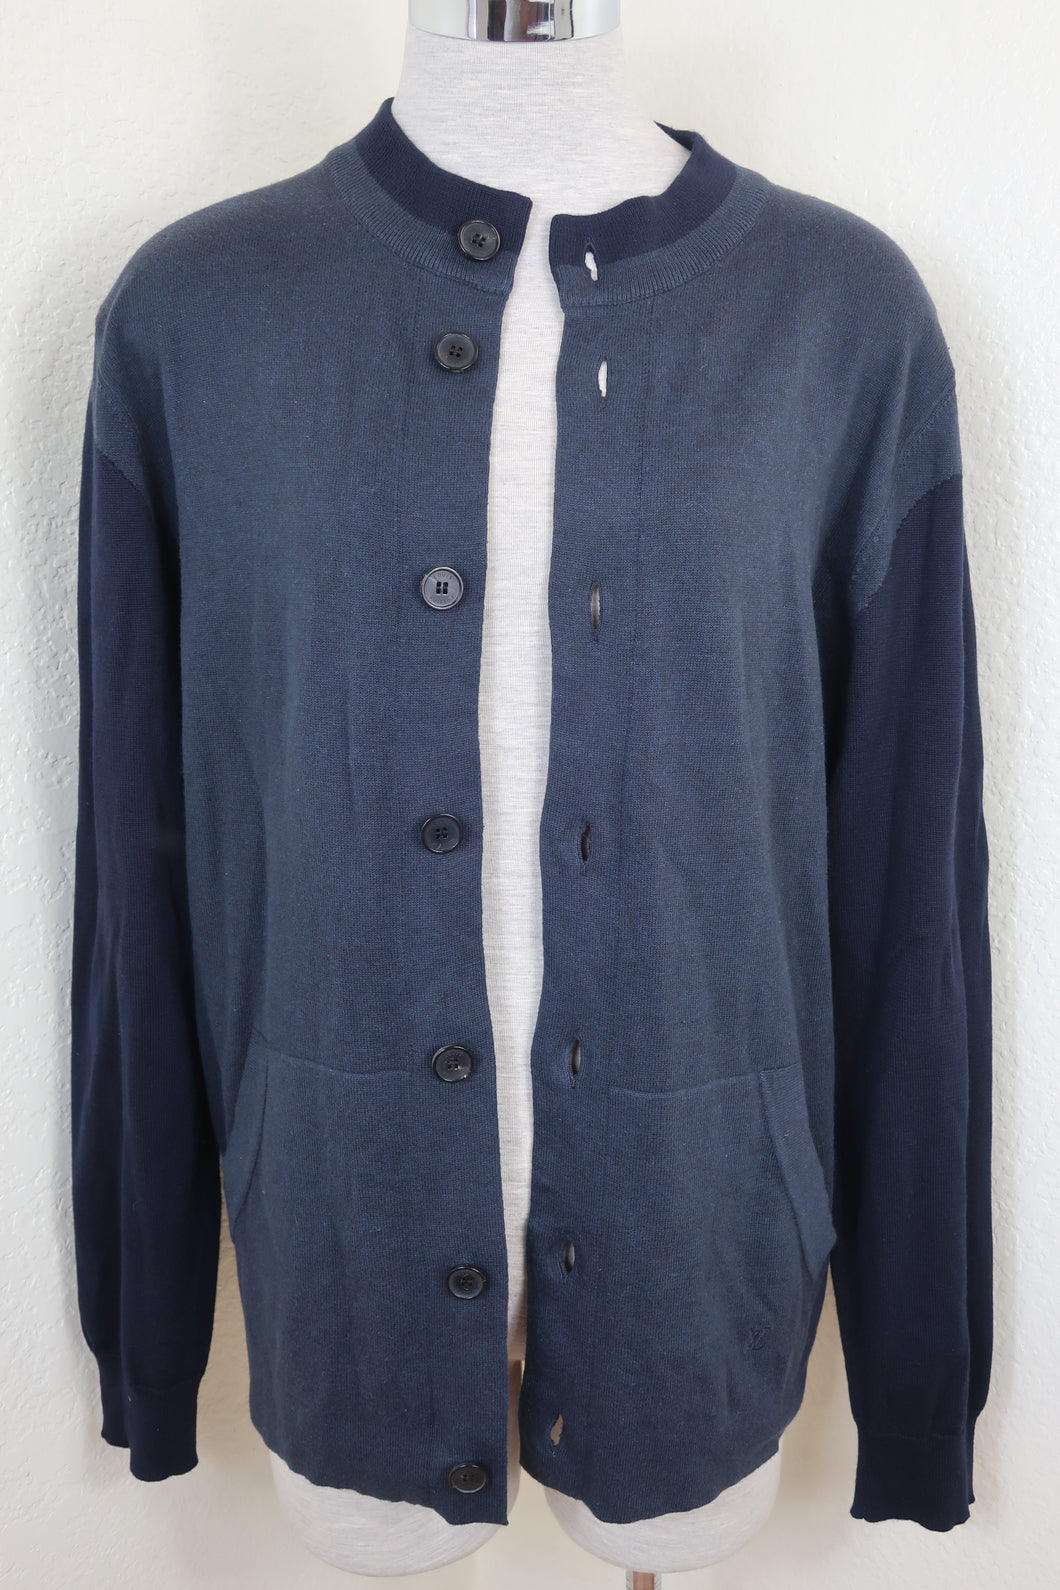 LOUIS VUITTON Black Grey 2Tone Cotton Button Cardigan Sweater Jacket Medium 6 7 8